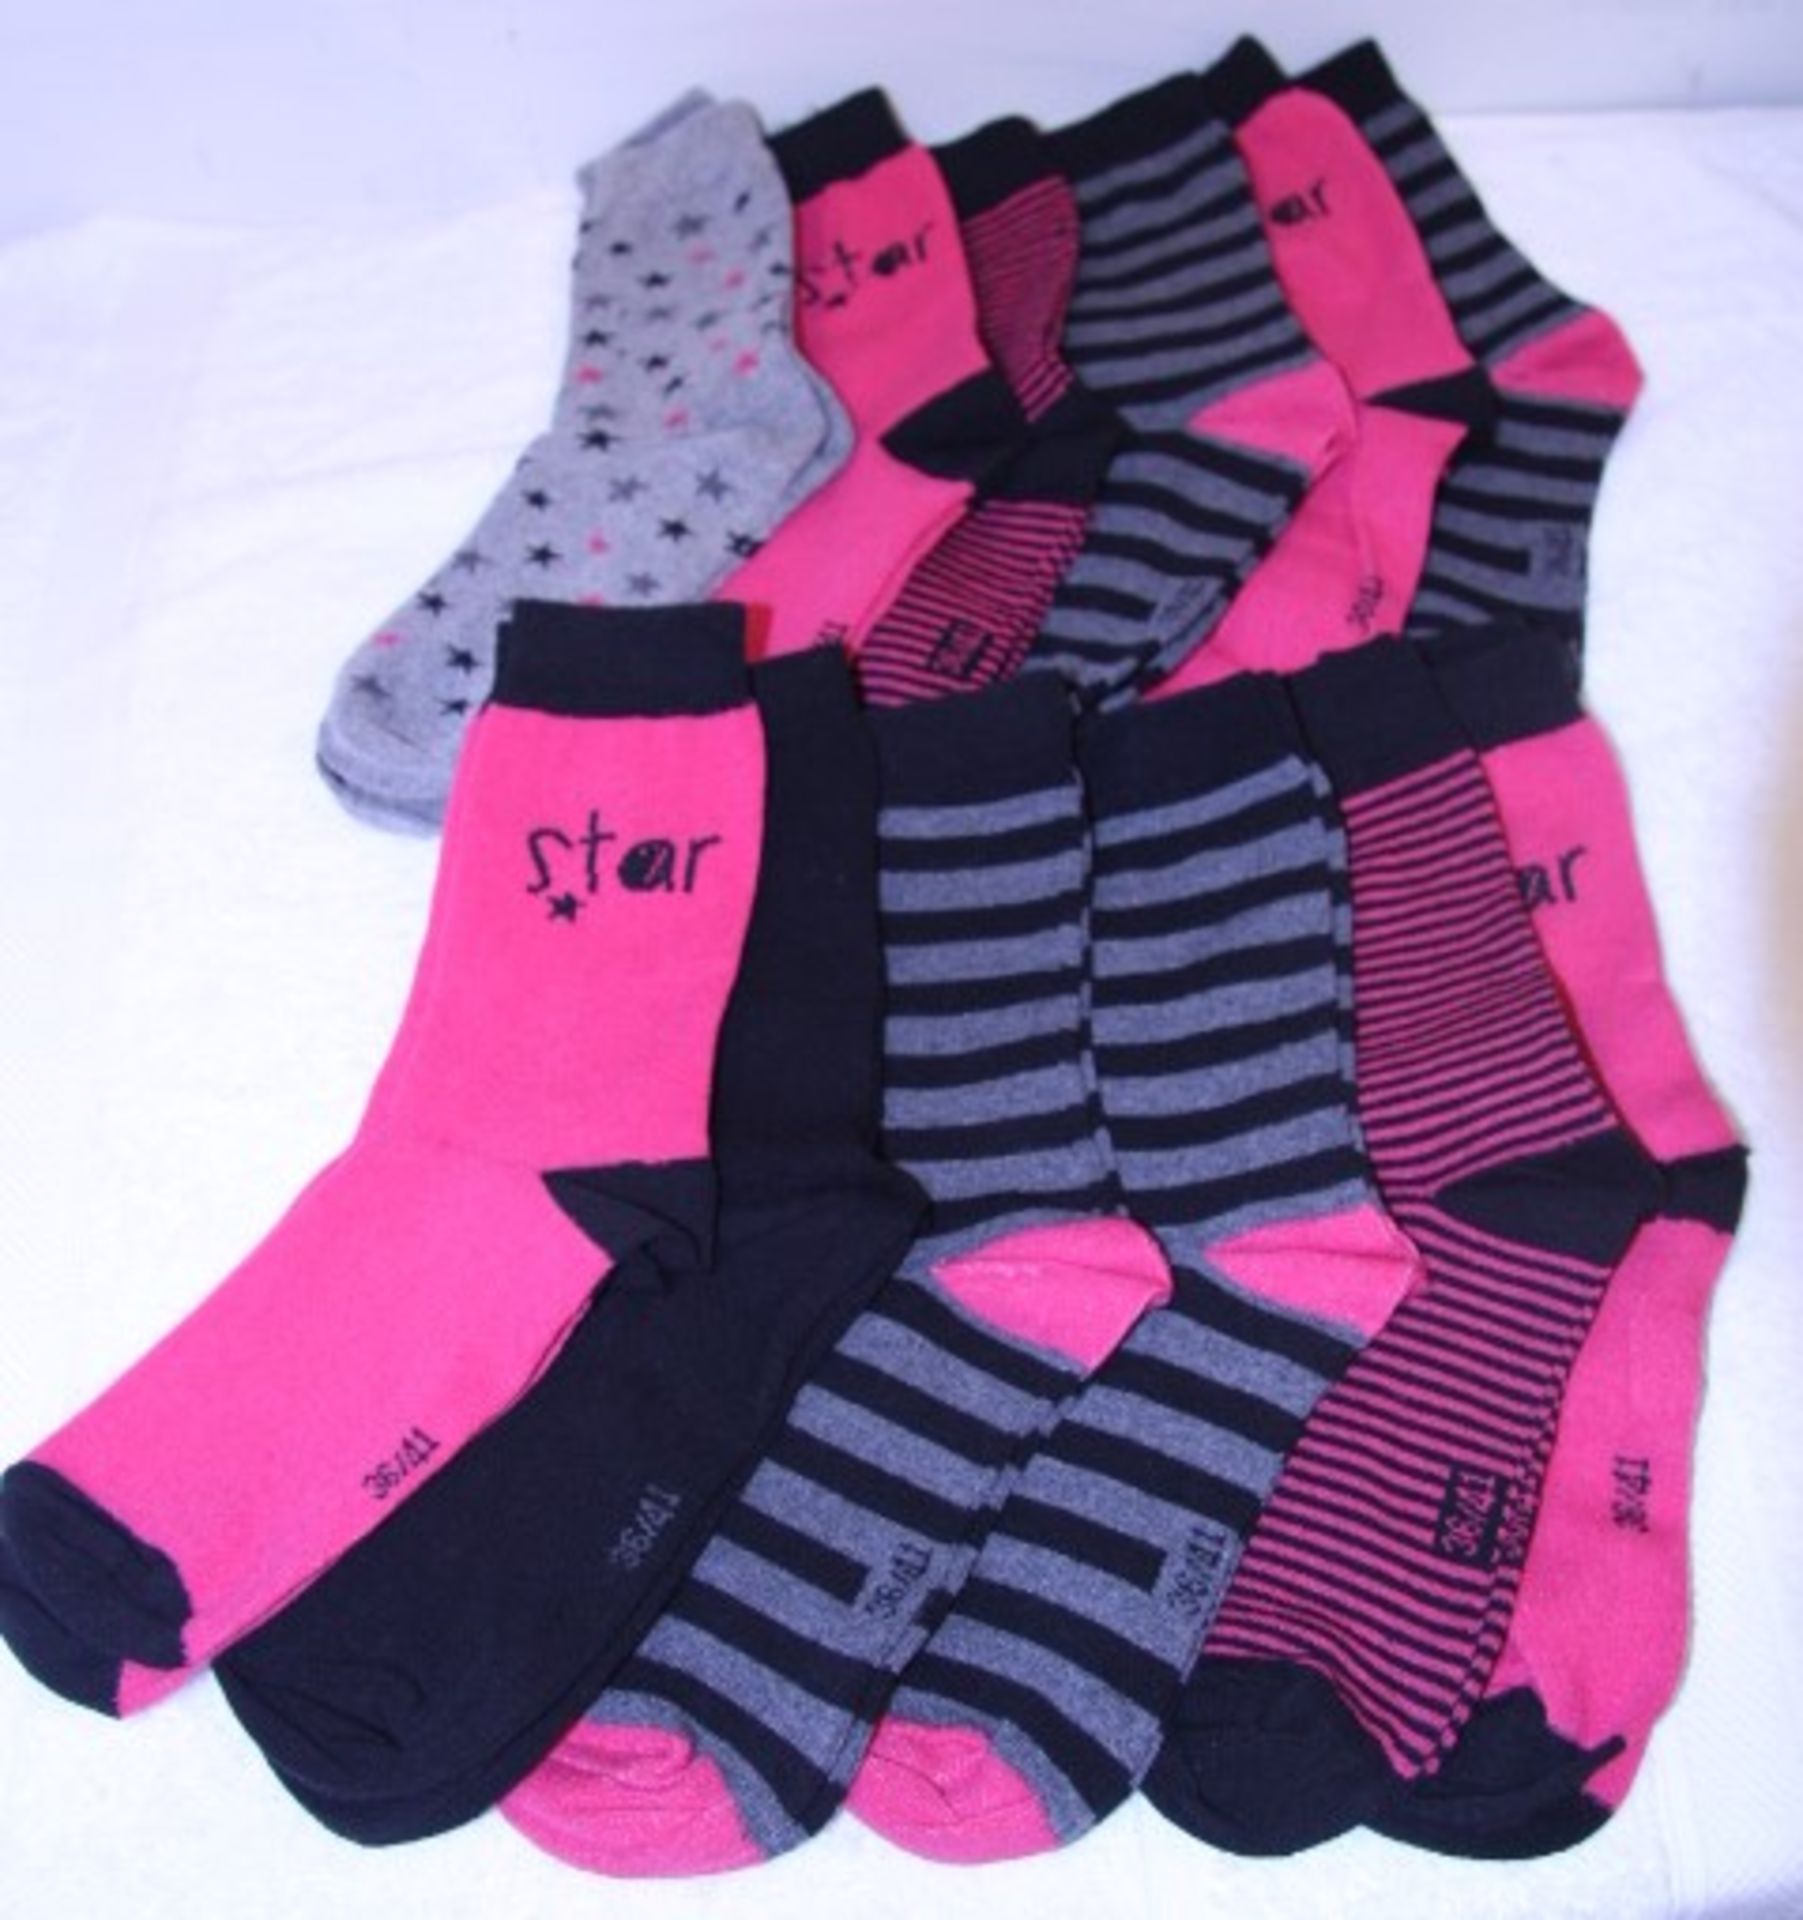 V *TRADE QTY* Brand New A Lot of Twelve Pairs Ladies Fashion Socks (Designs May Vary) - ISP £16.